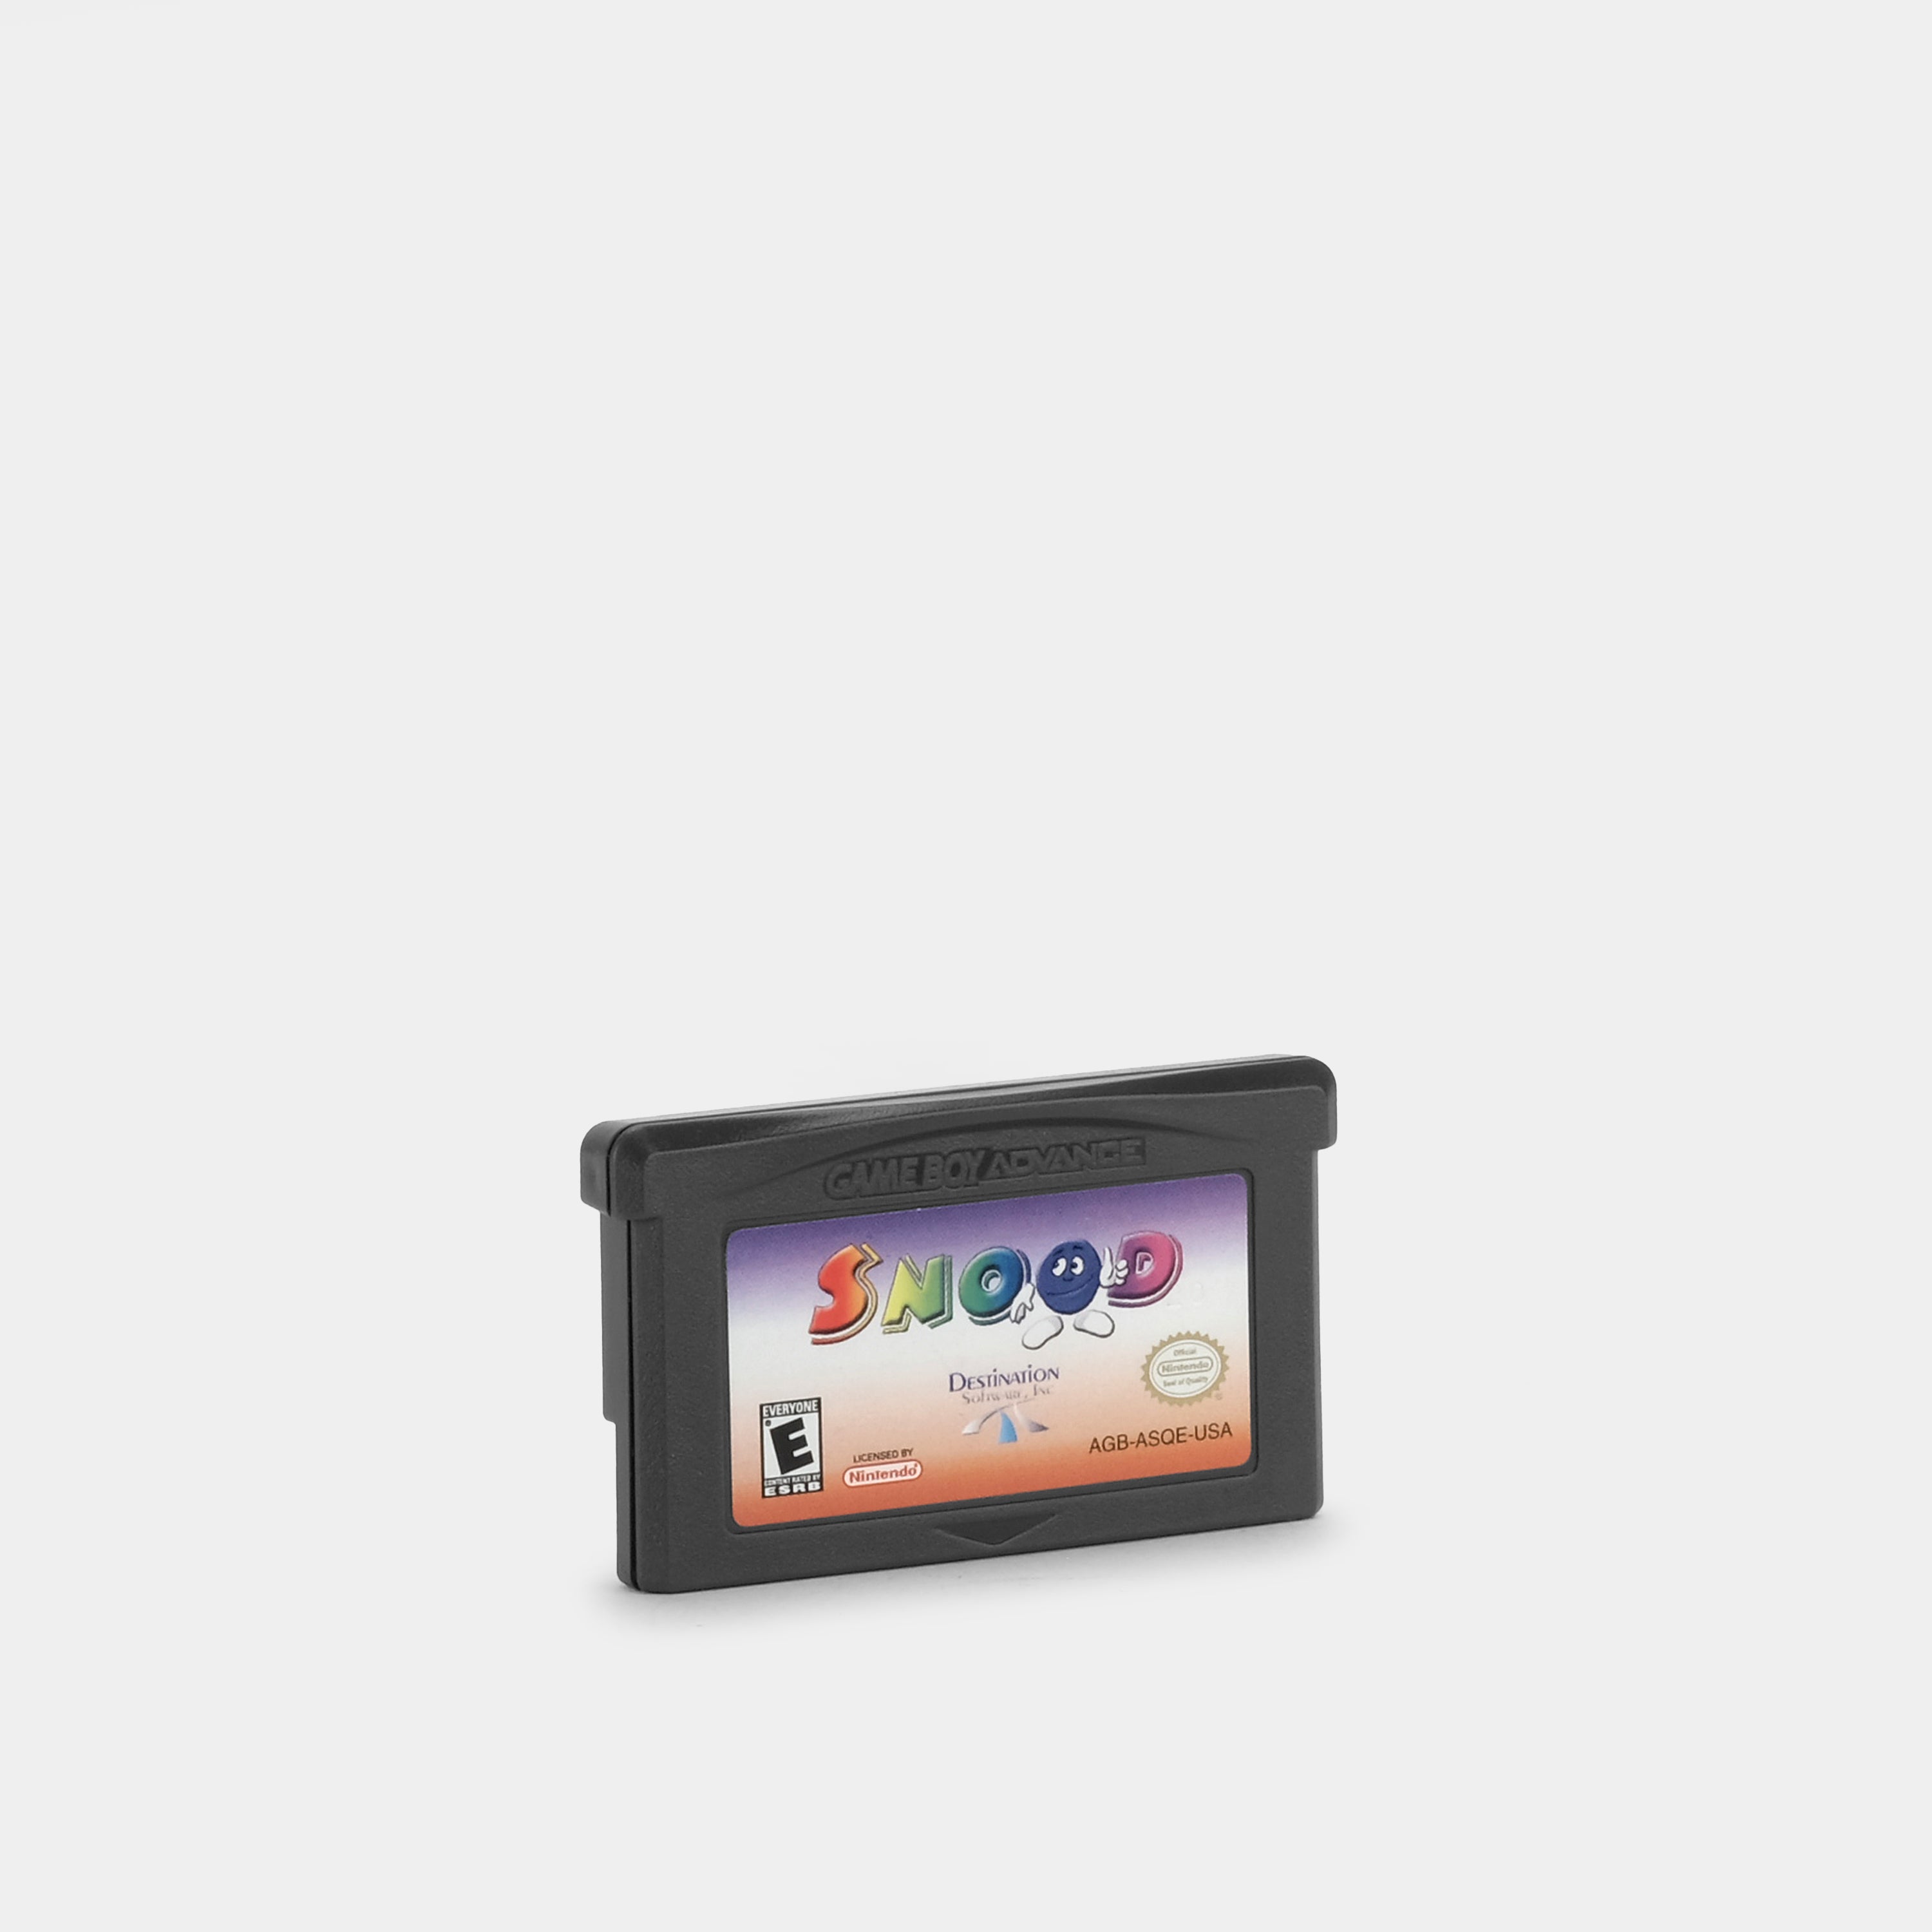 Snood Game Boy Advance Game